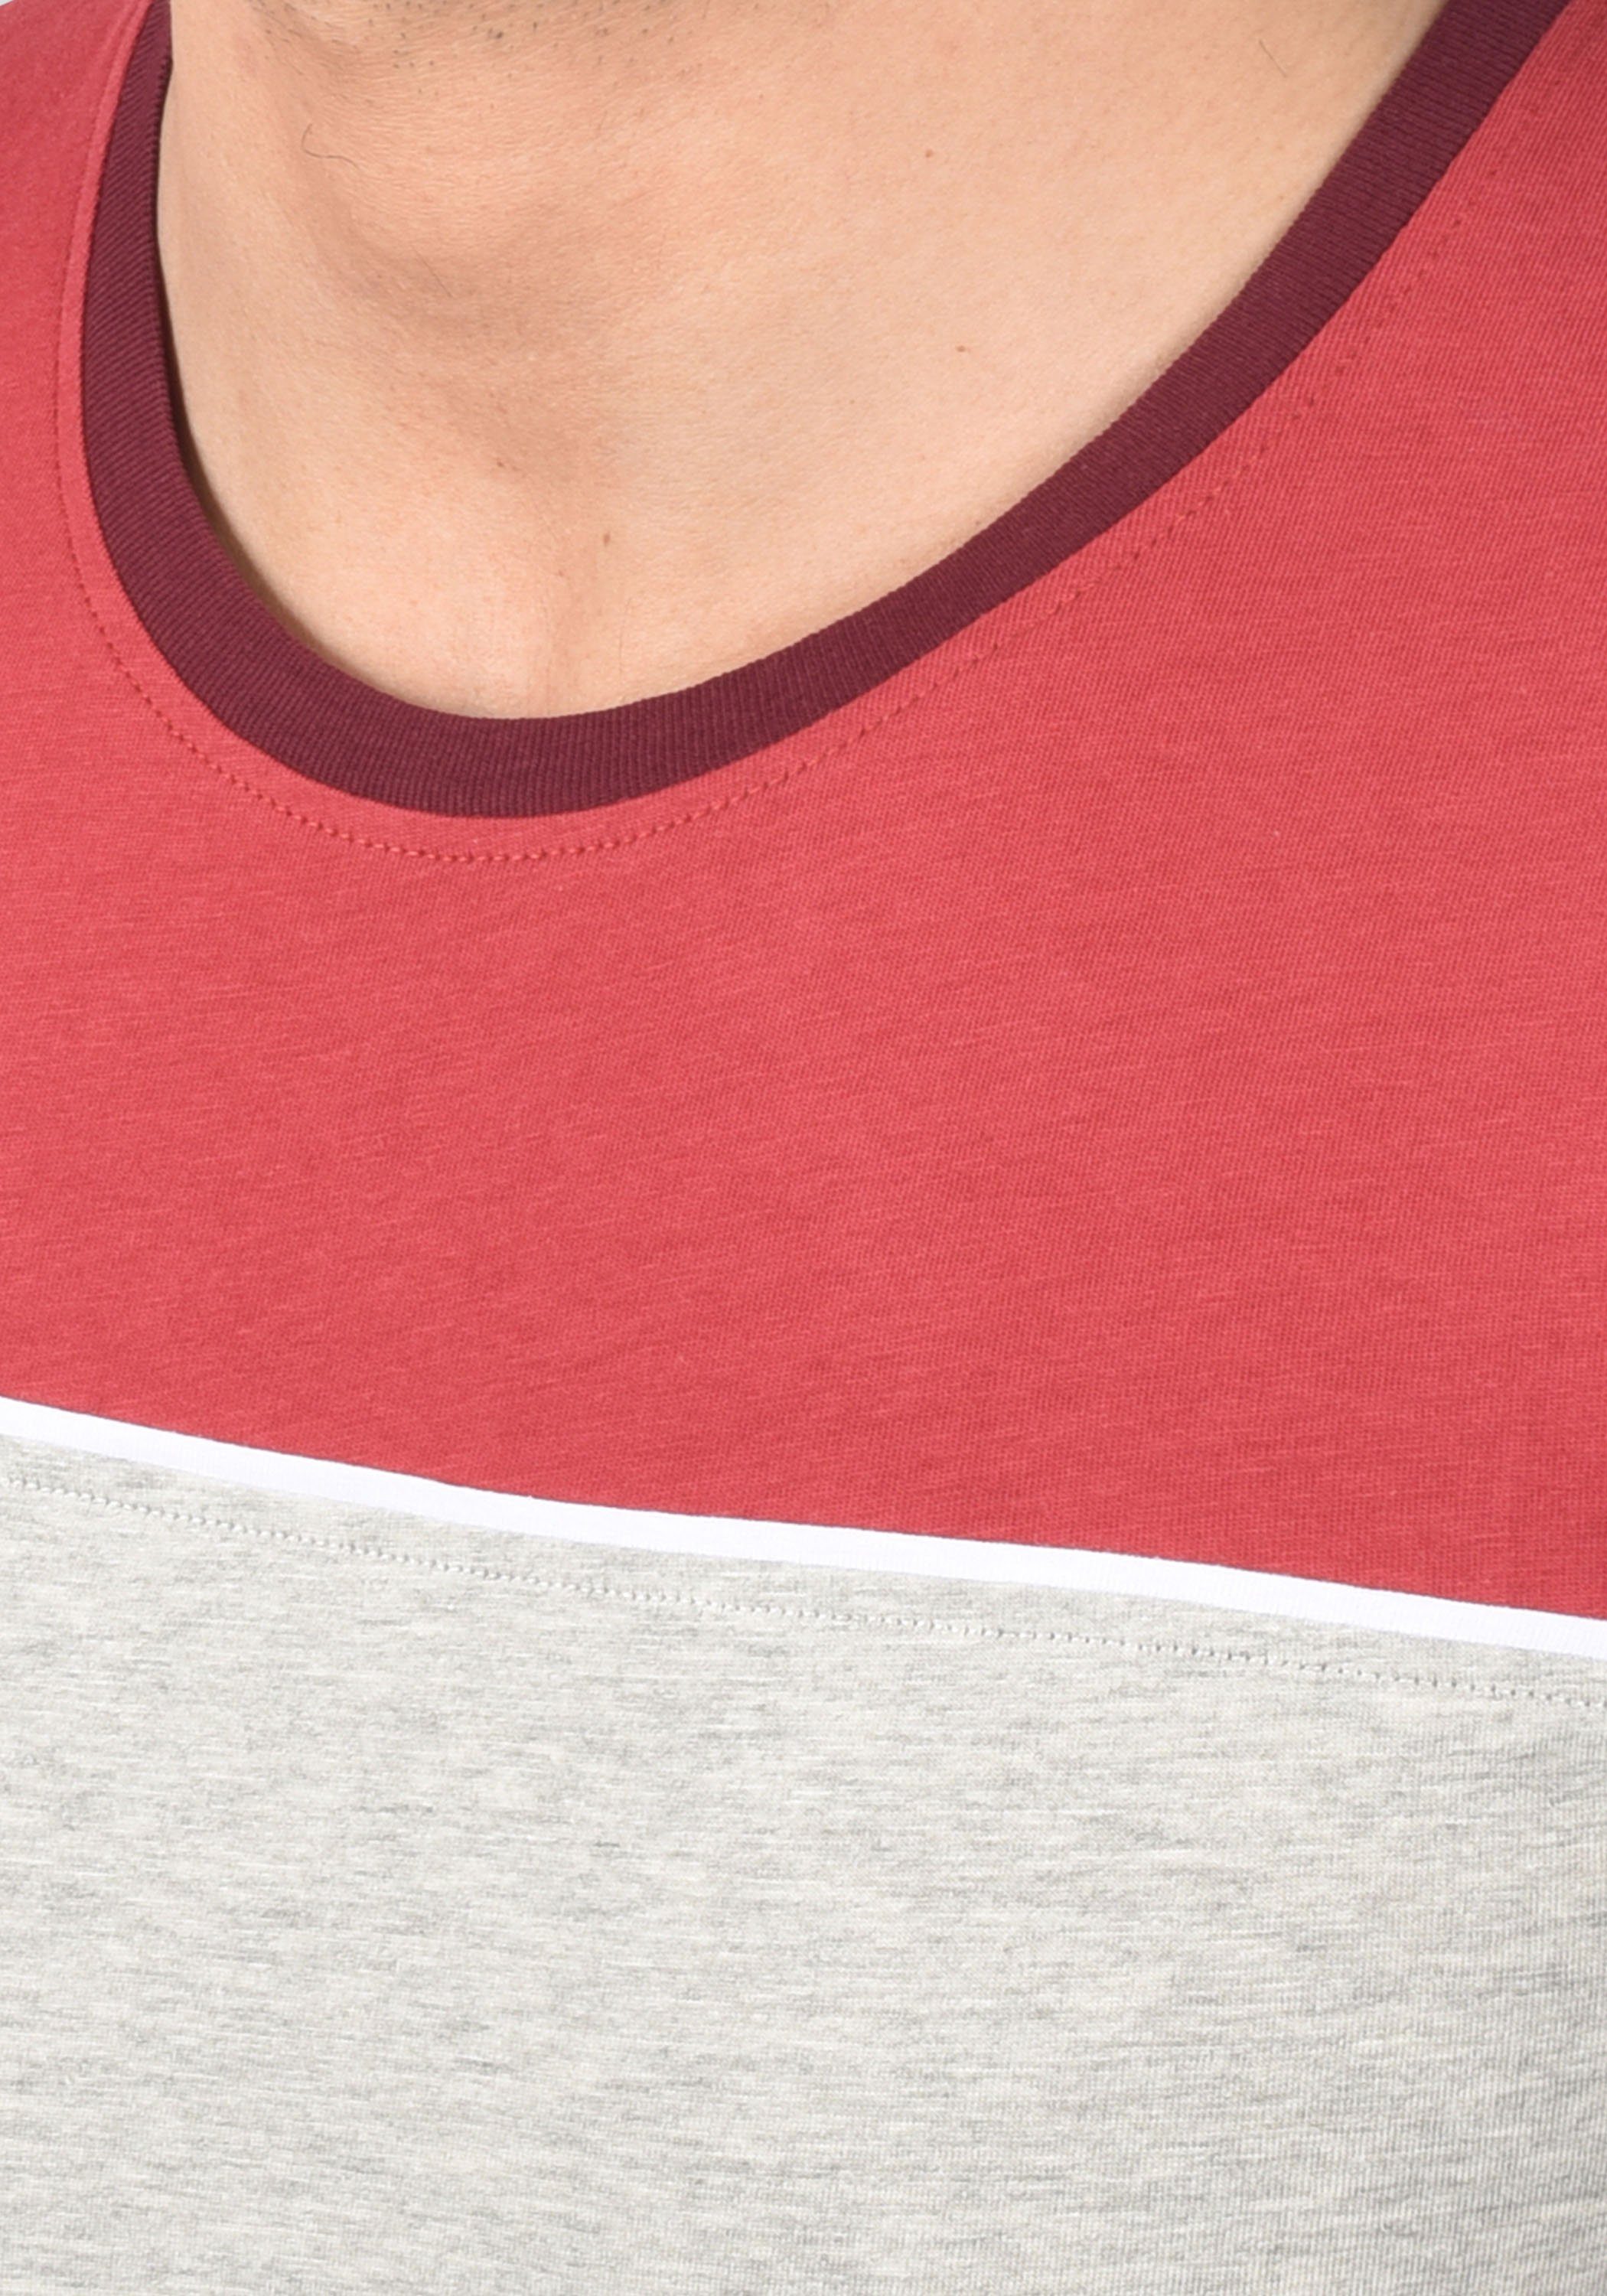 Wine Colorblocking-Optik !Solid T-Shirt in (0985) Red Rundhalsshirt SDCody